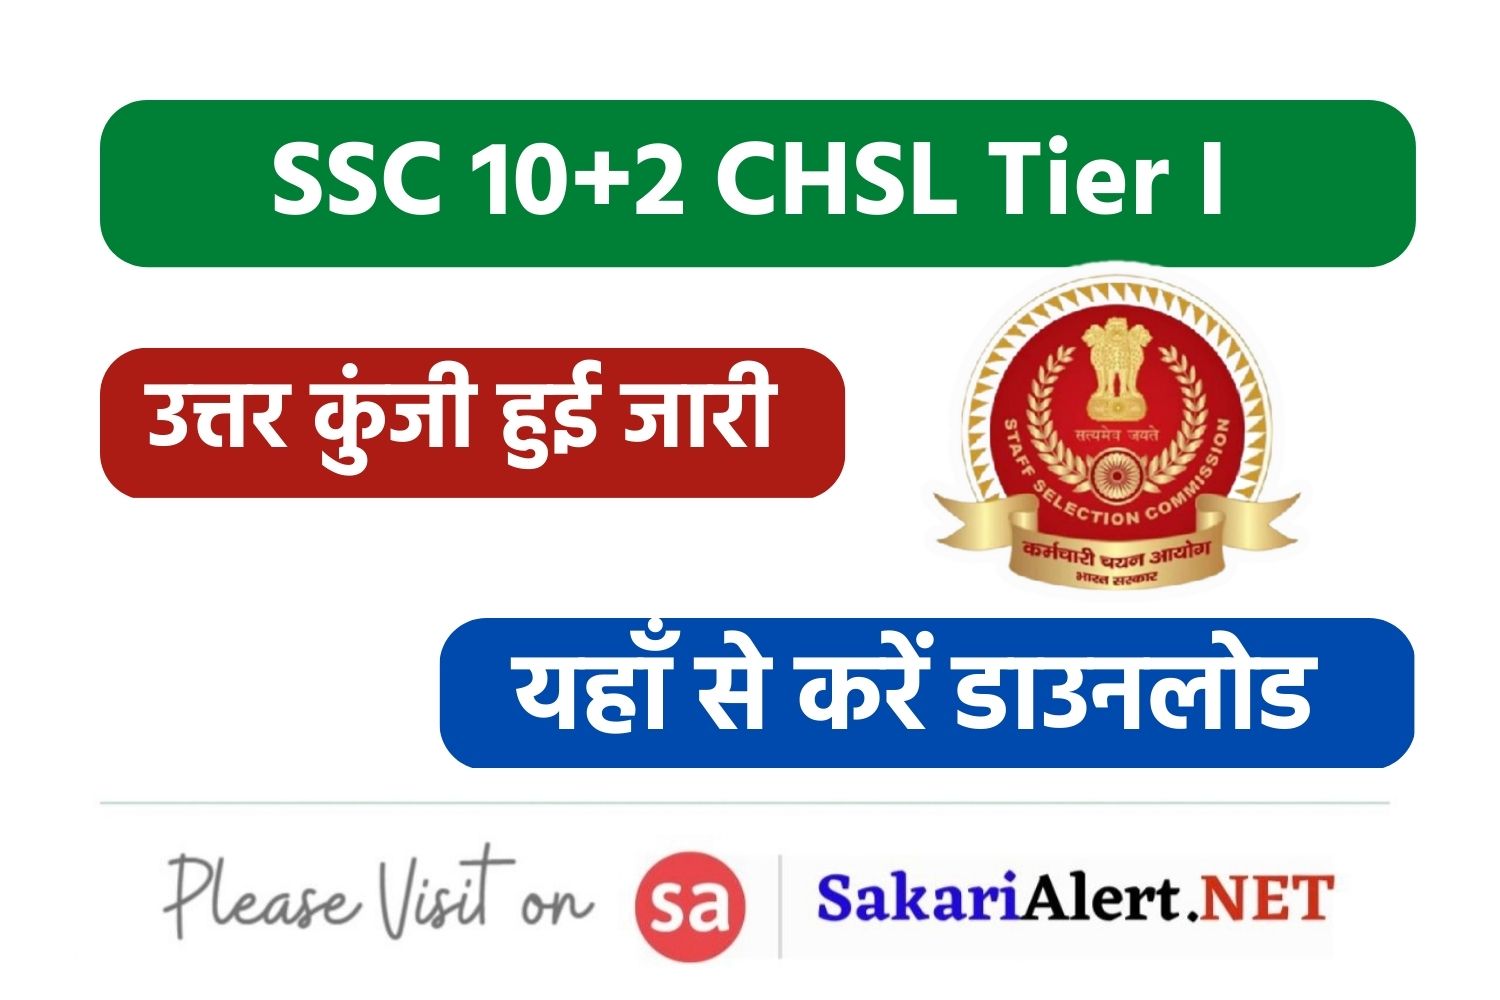 SSC 10+2 CHSL Tier I Answer Key | एसएससी CHSL टियर 1 उत्तर कुंजी